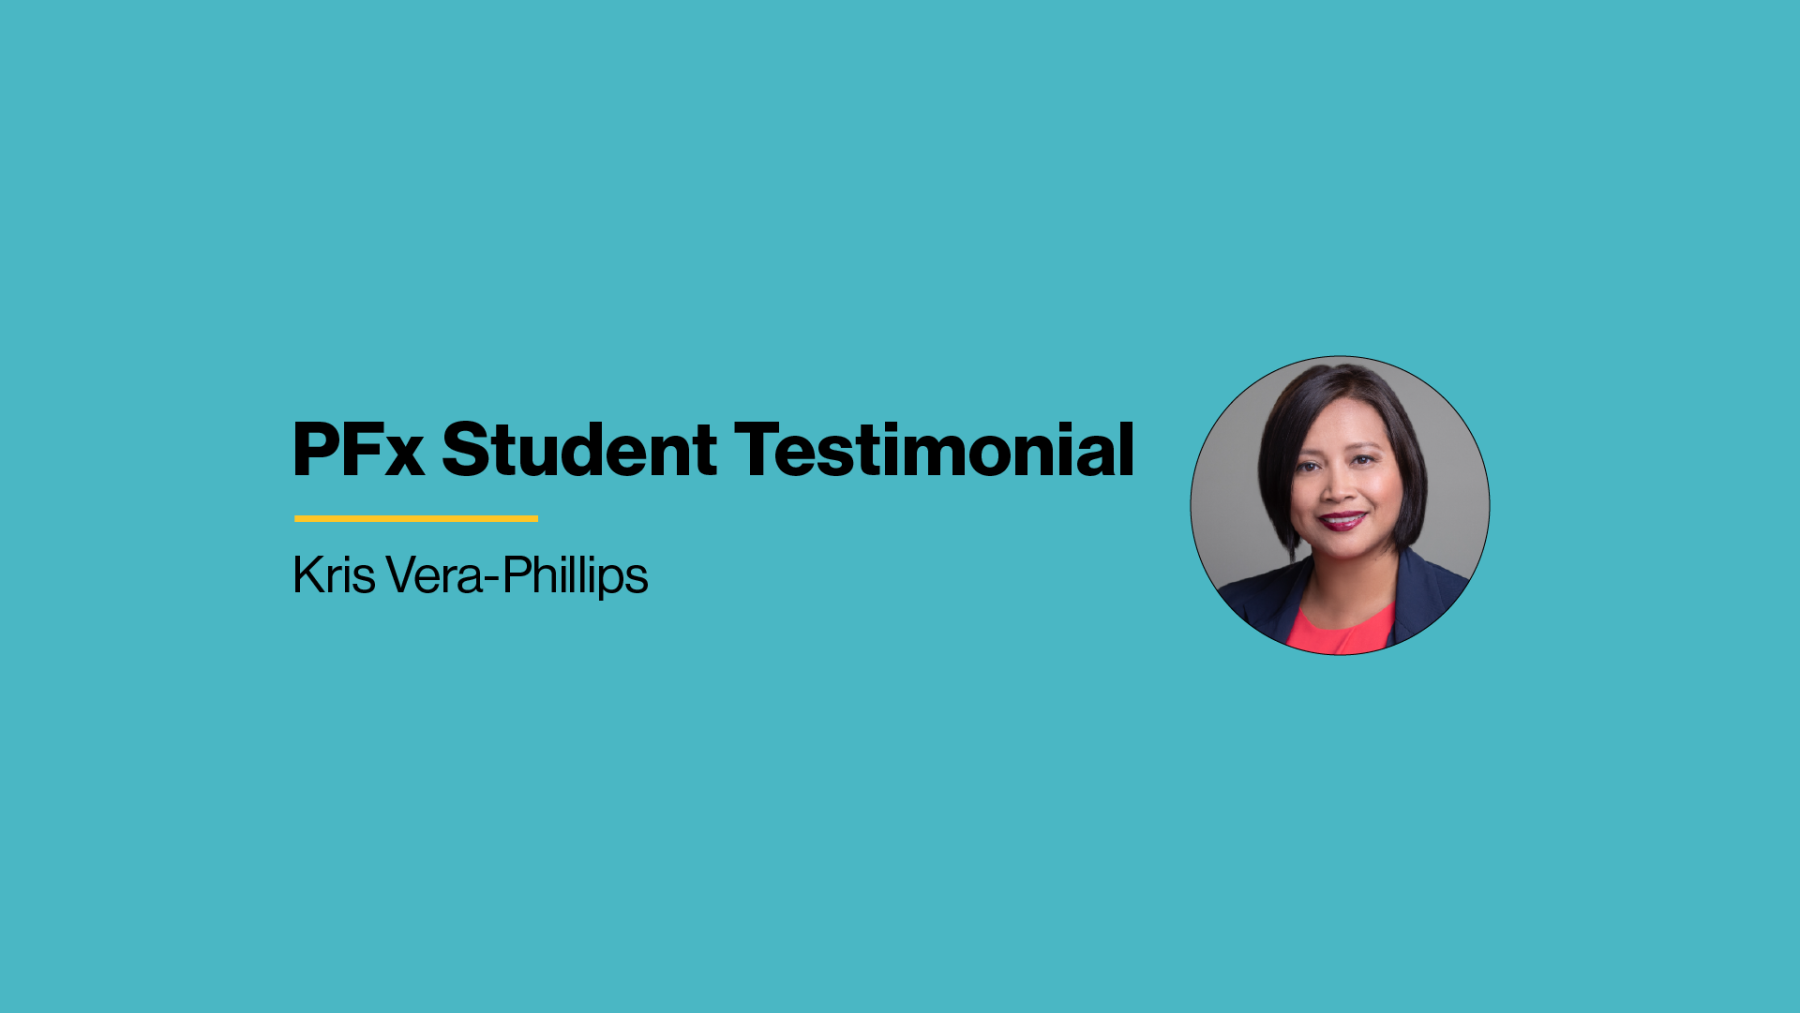 PFx Student Testimonial - Kris Vera-Phillips